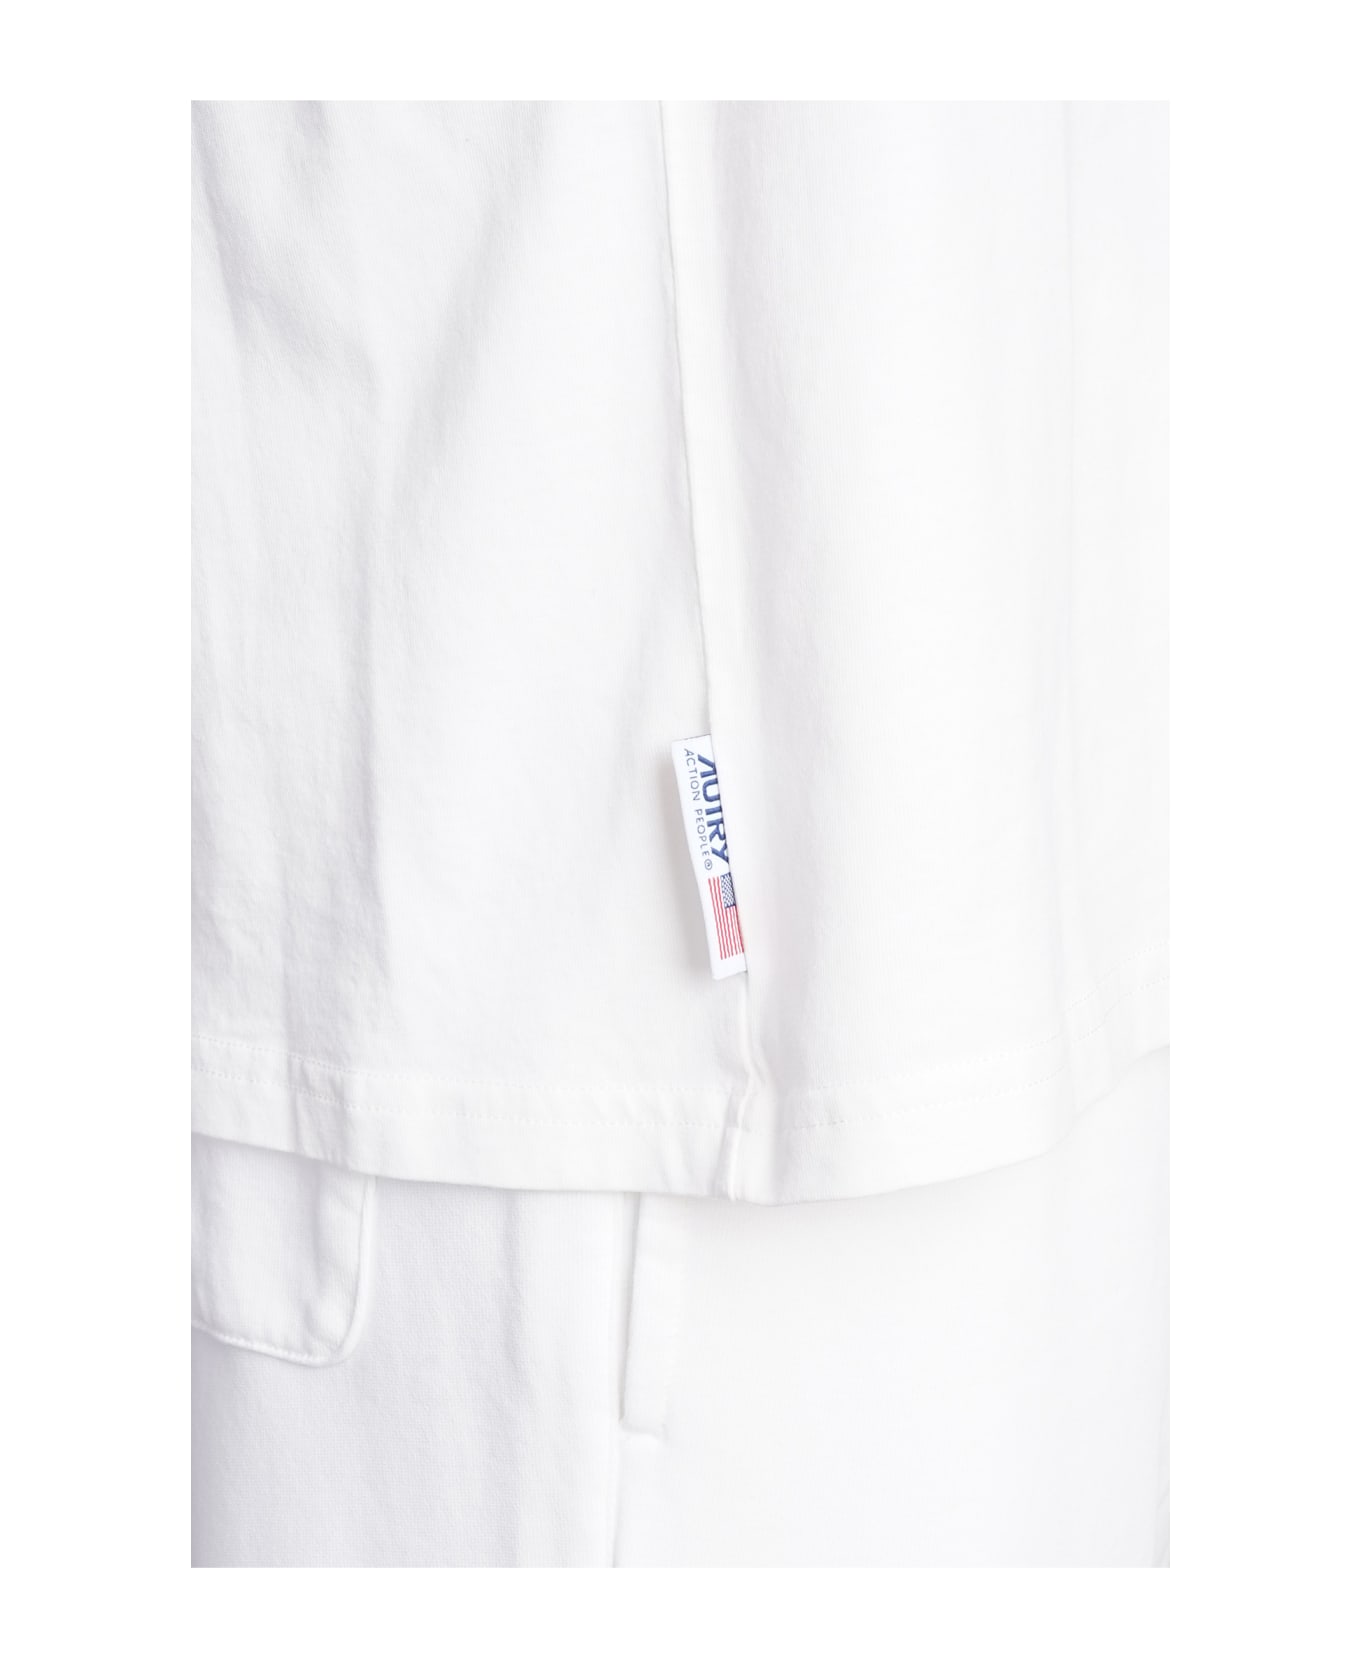 Autry T-shirt In White Cotton - white